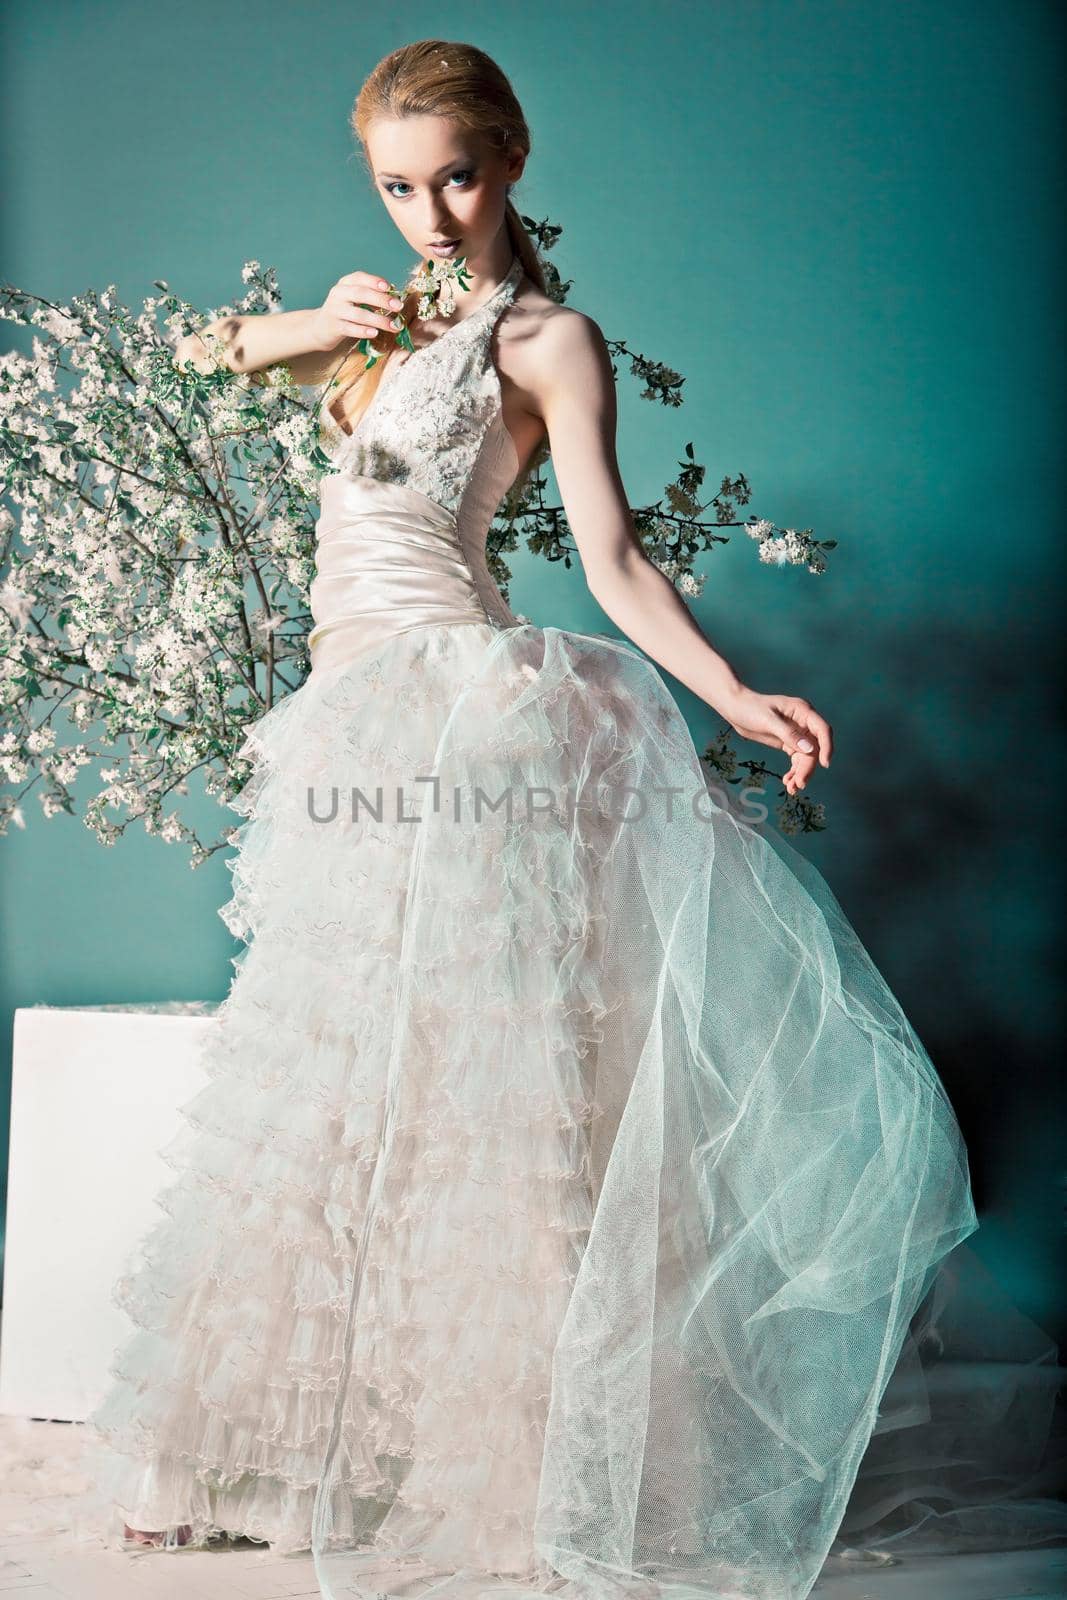 Bride in wedding dress behind bush with flowers by Julenochek